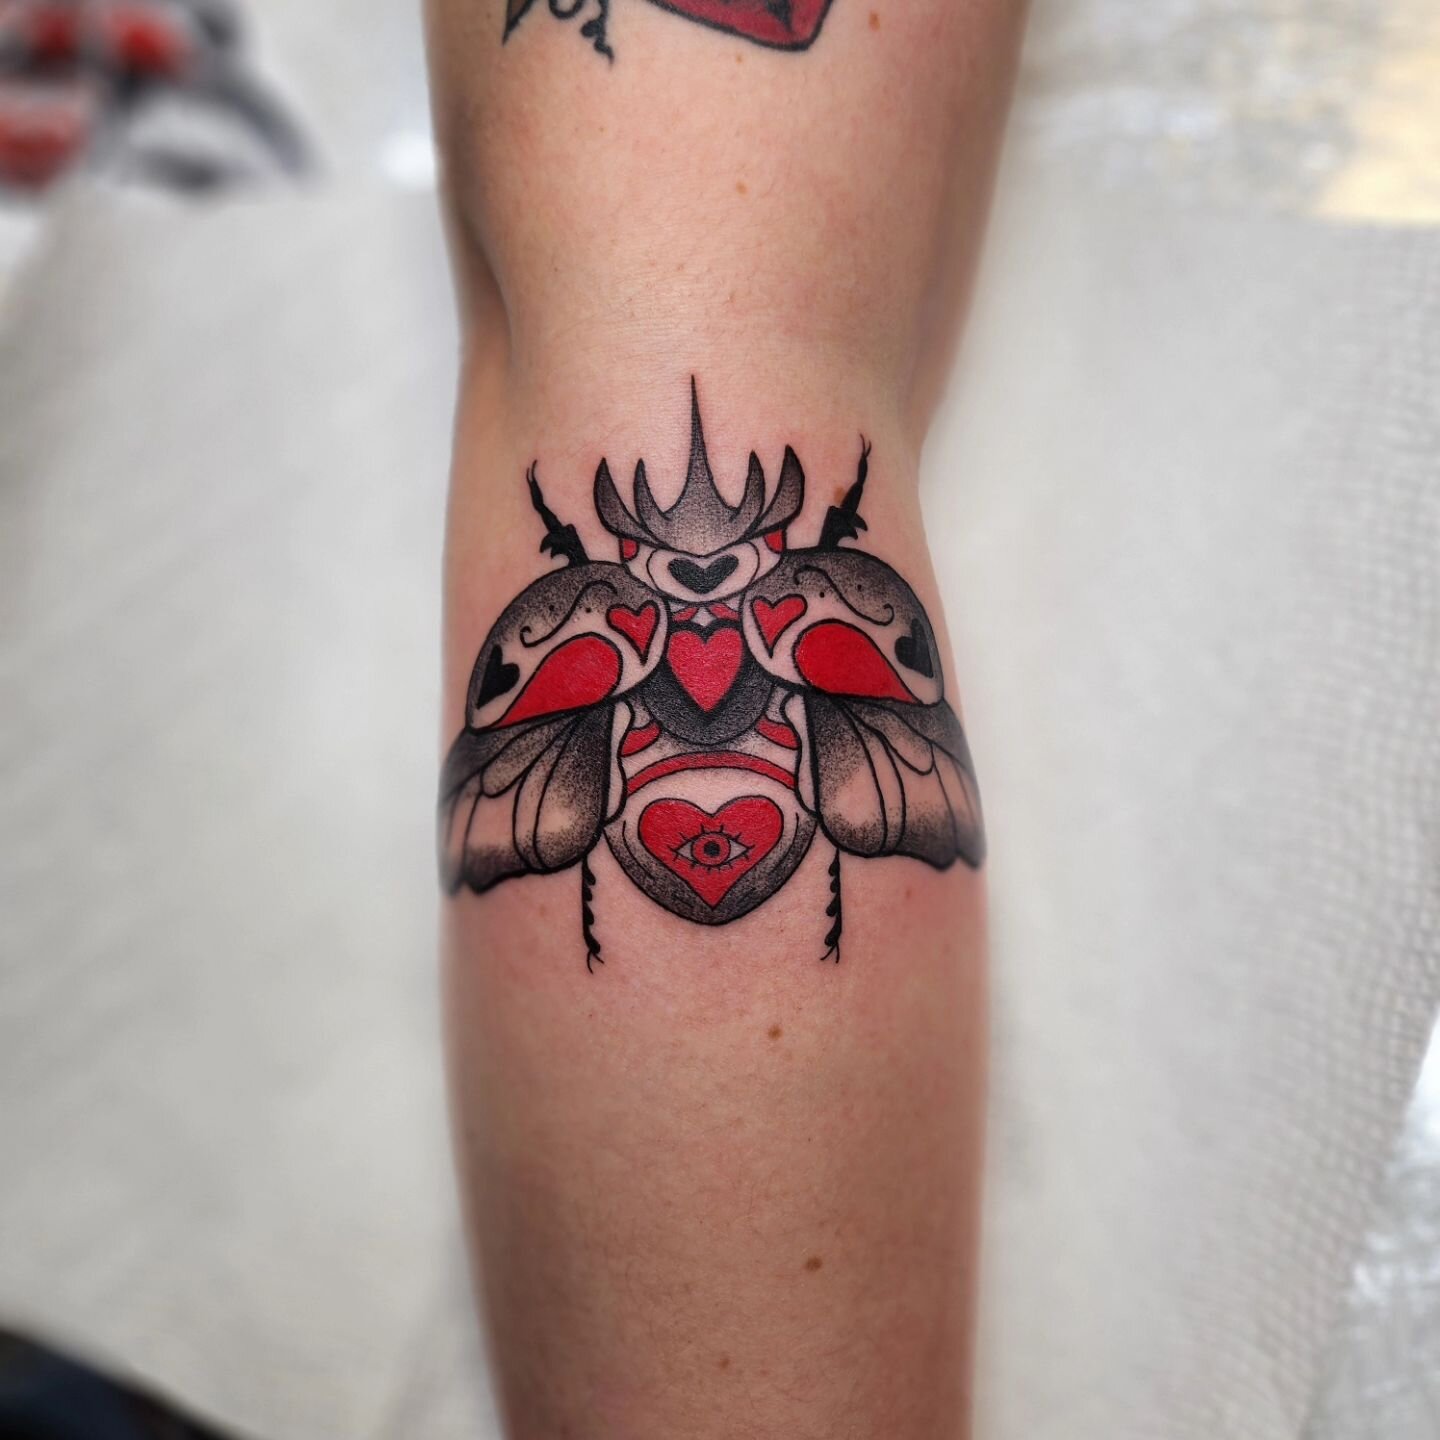 ❤️ Beetle Heart for Madison ❤️
.
.
.
.
.
.
#beetletattoo #bugtattoo #colortattoo #flashtattoo #flashdesign #tattooartist #georgiatattoo #georgiatattooartist #atlantatattooartist #atlantatattoo #colortattoo